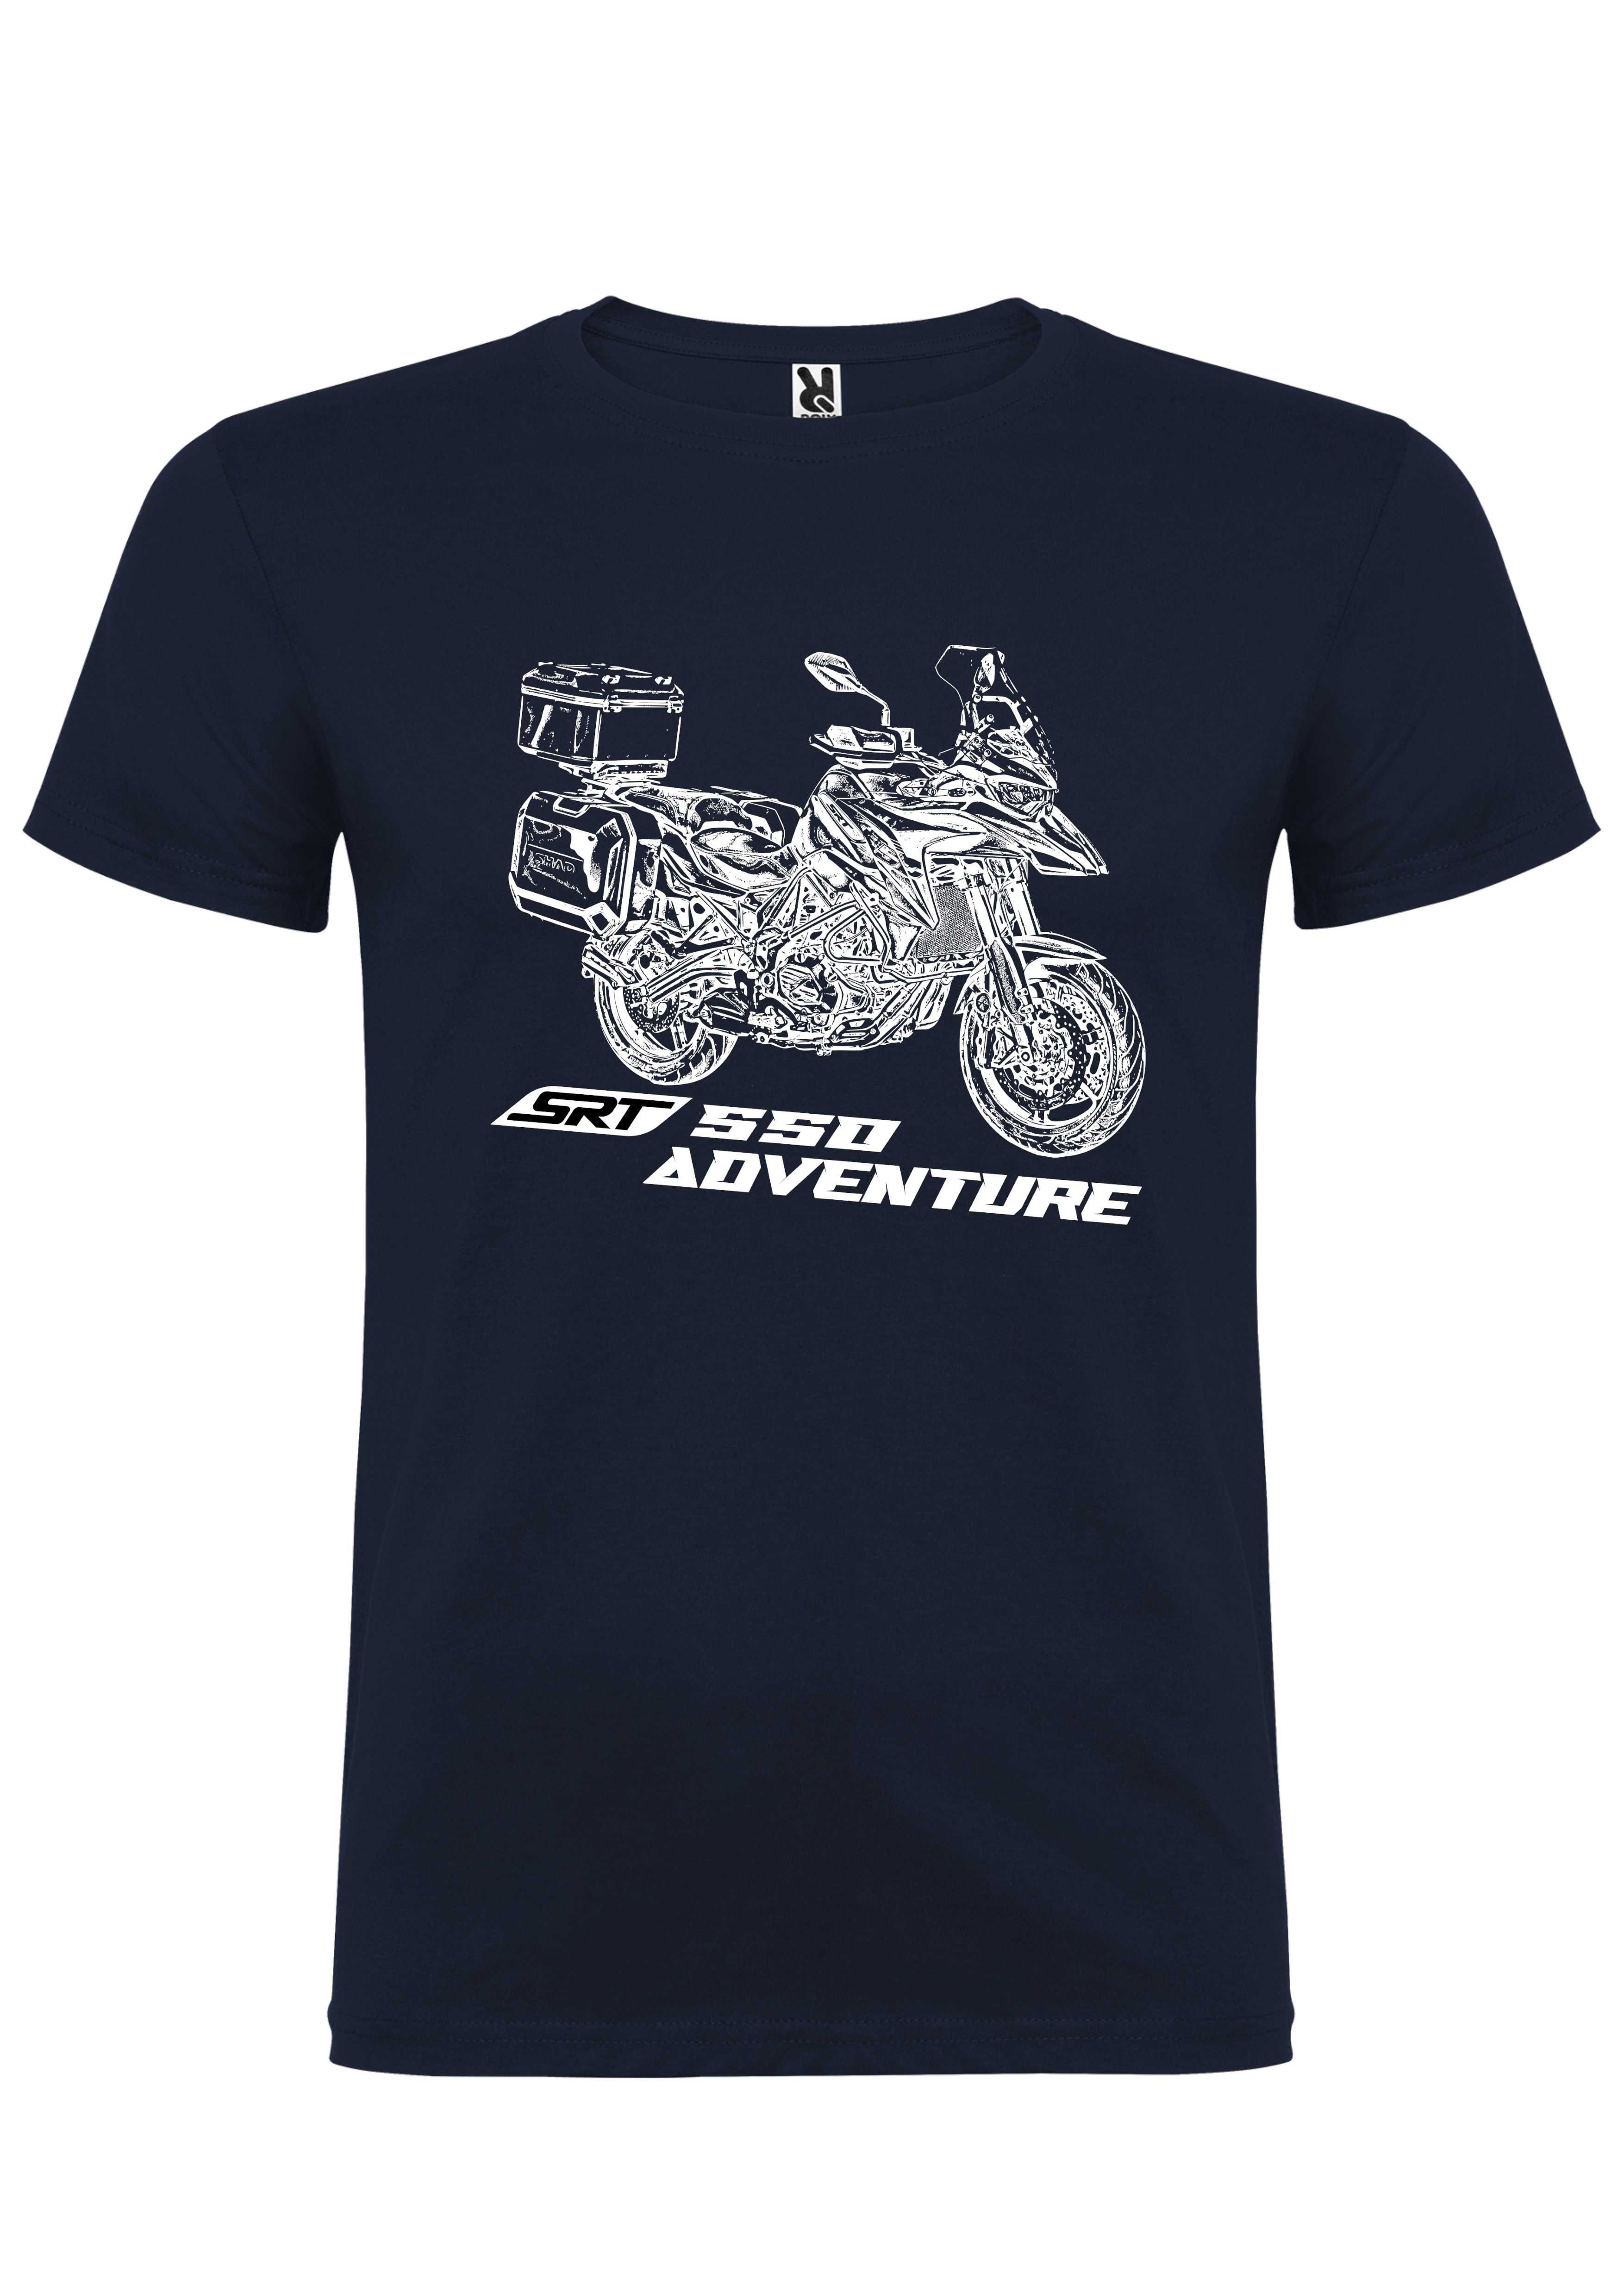 T-shirt QJ Motor SRT 550 Adventure